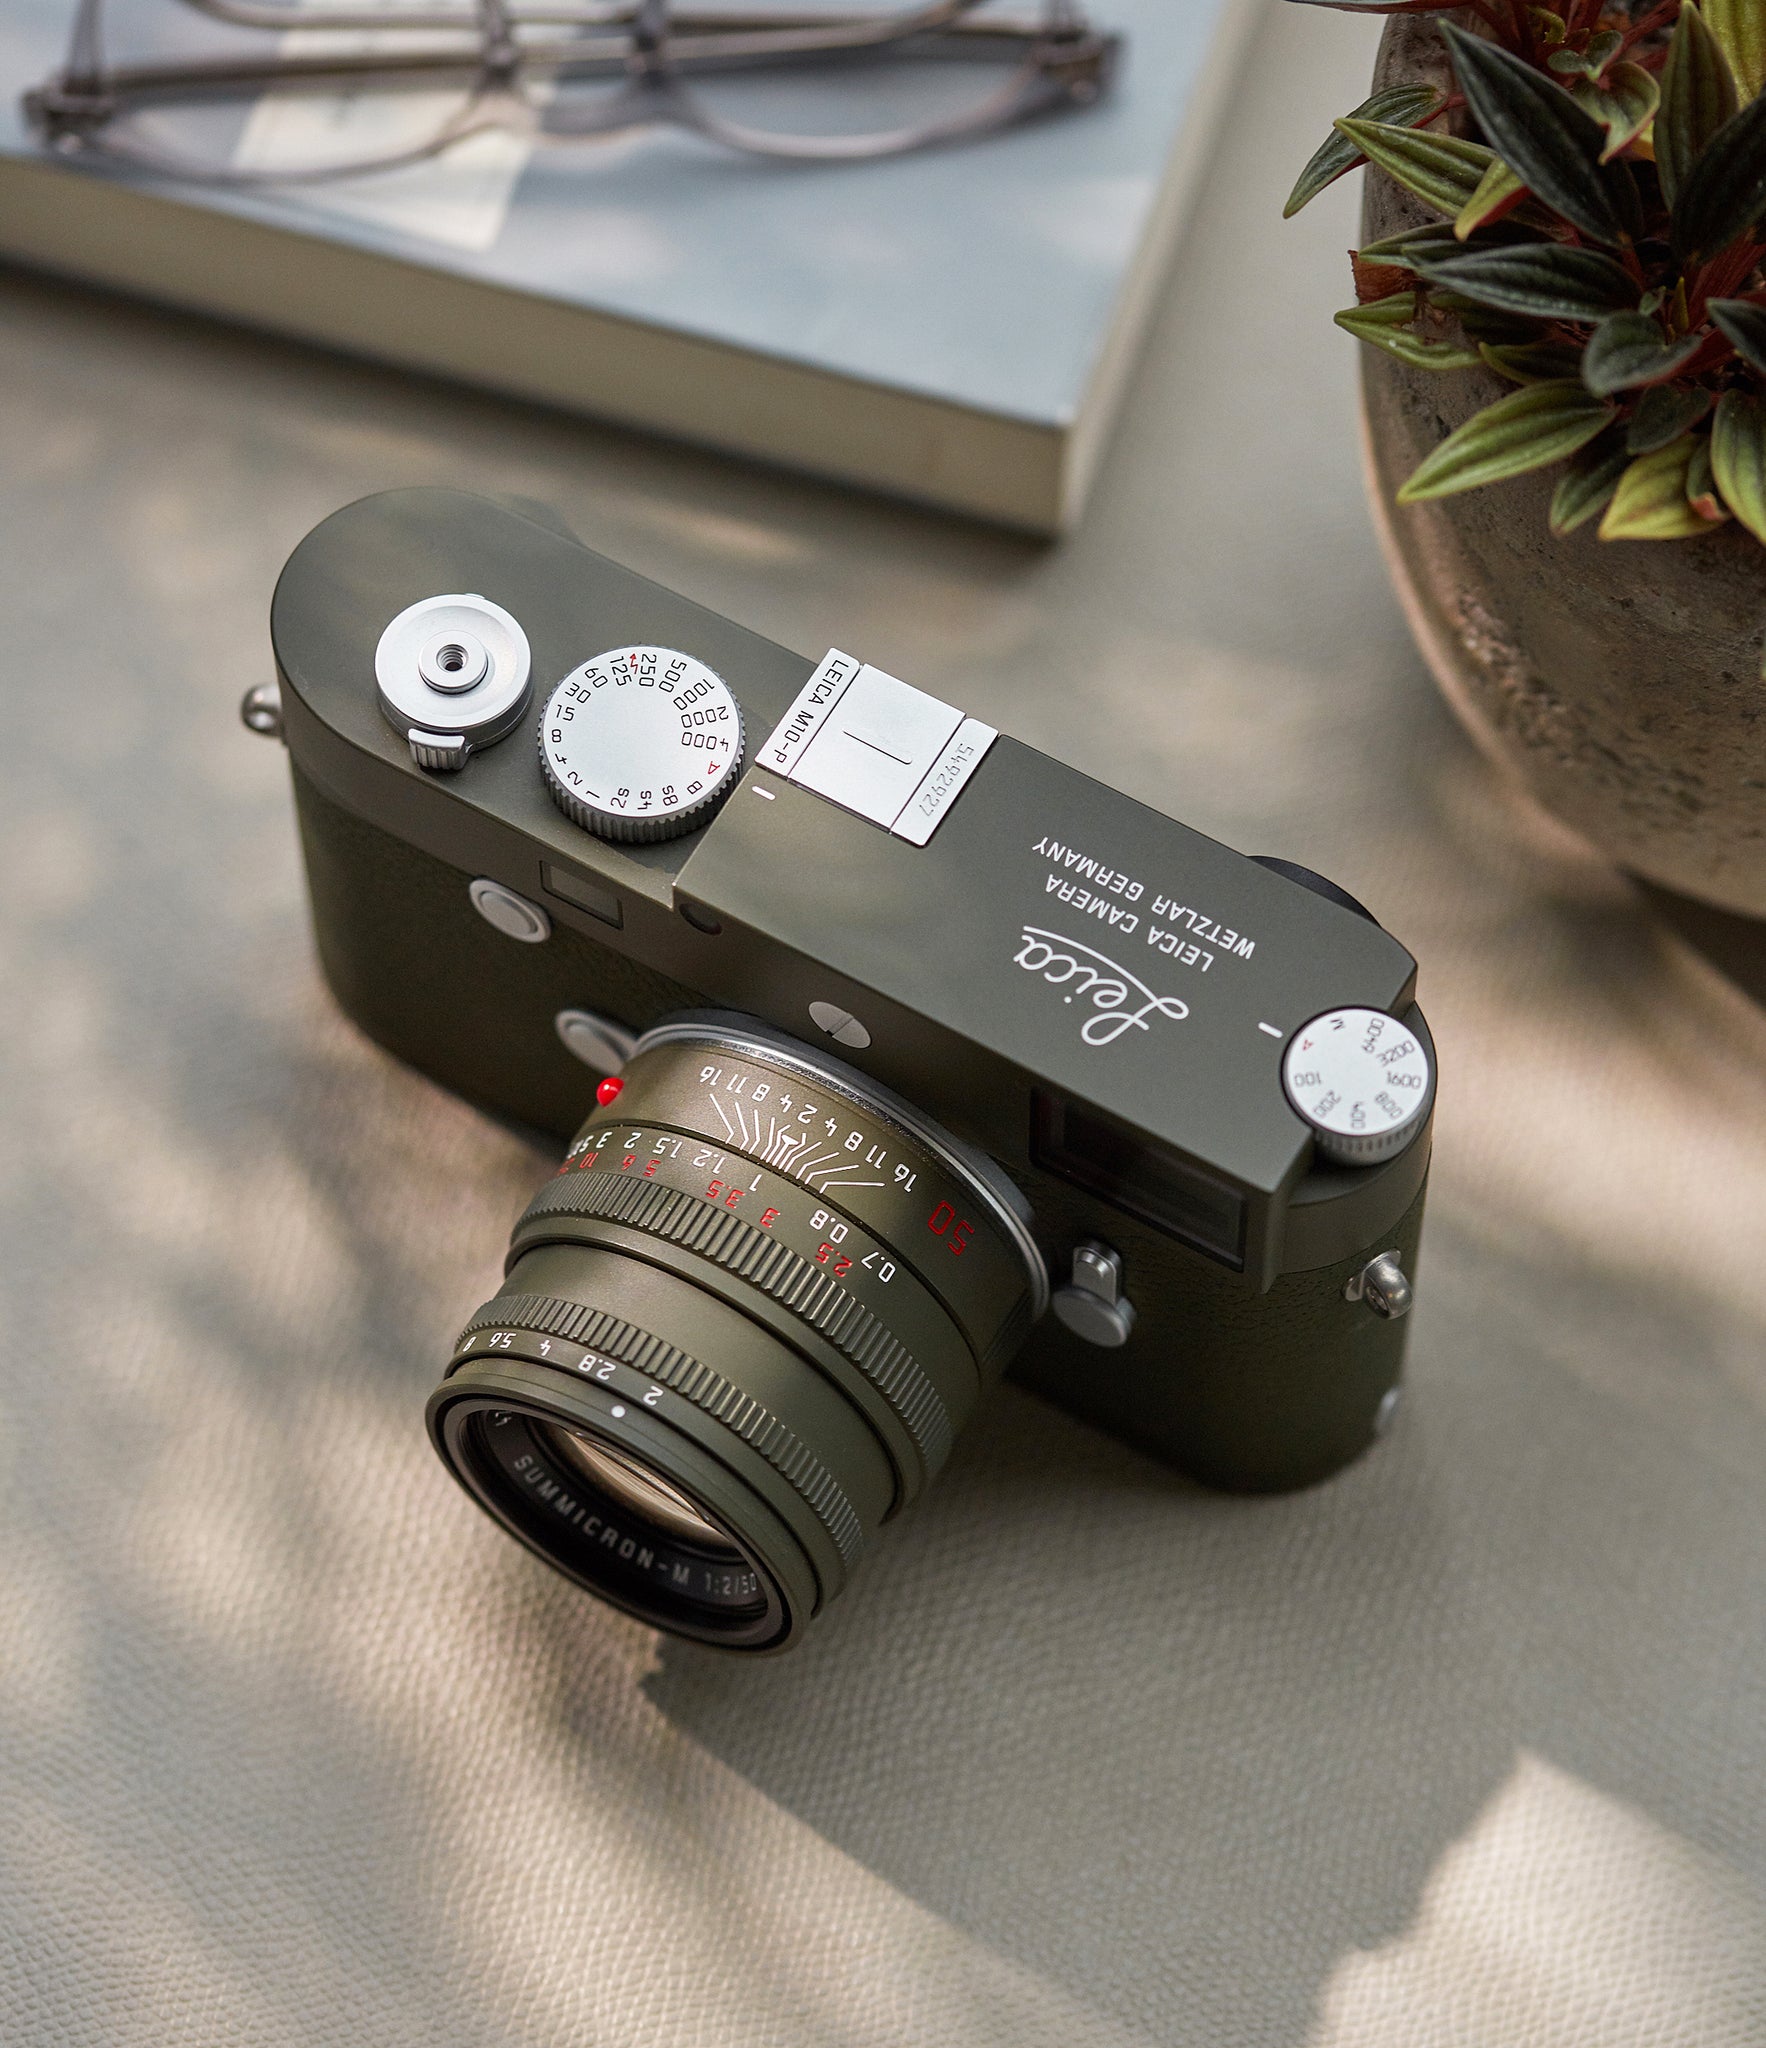 M10-P 'Safari Edition' camera | body and lens